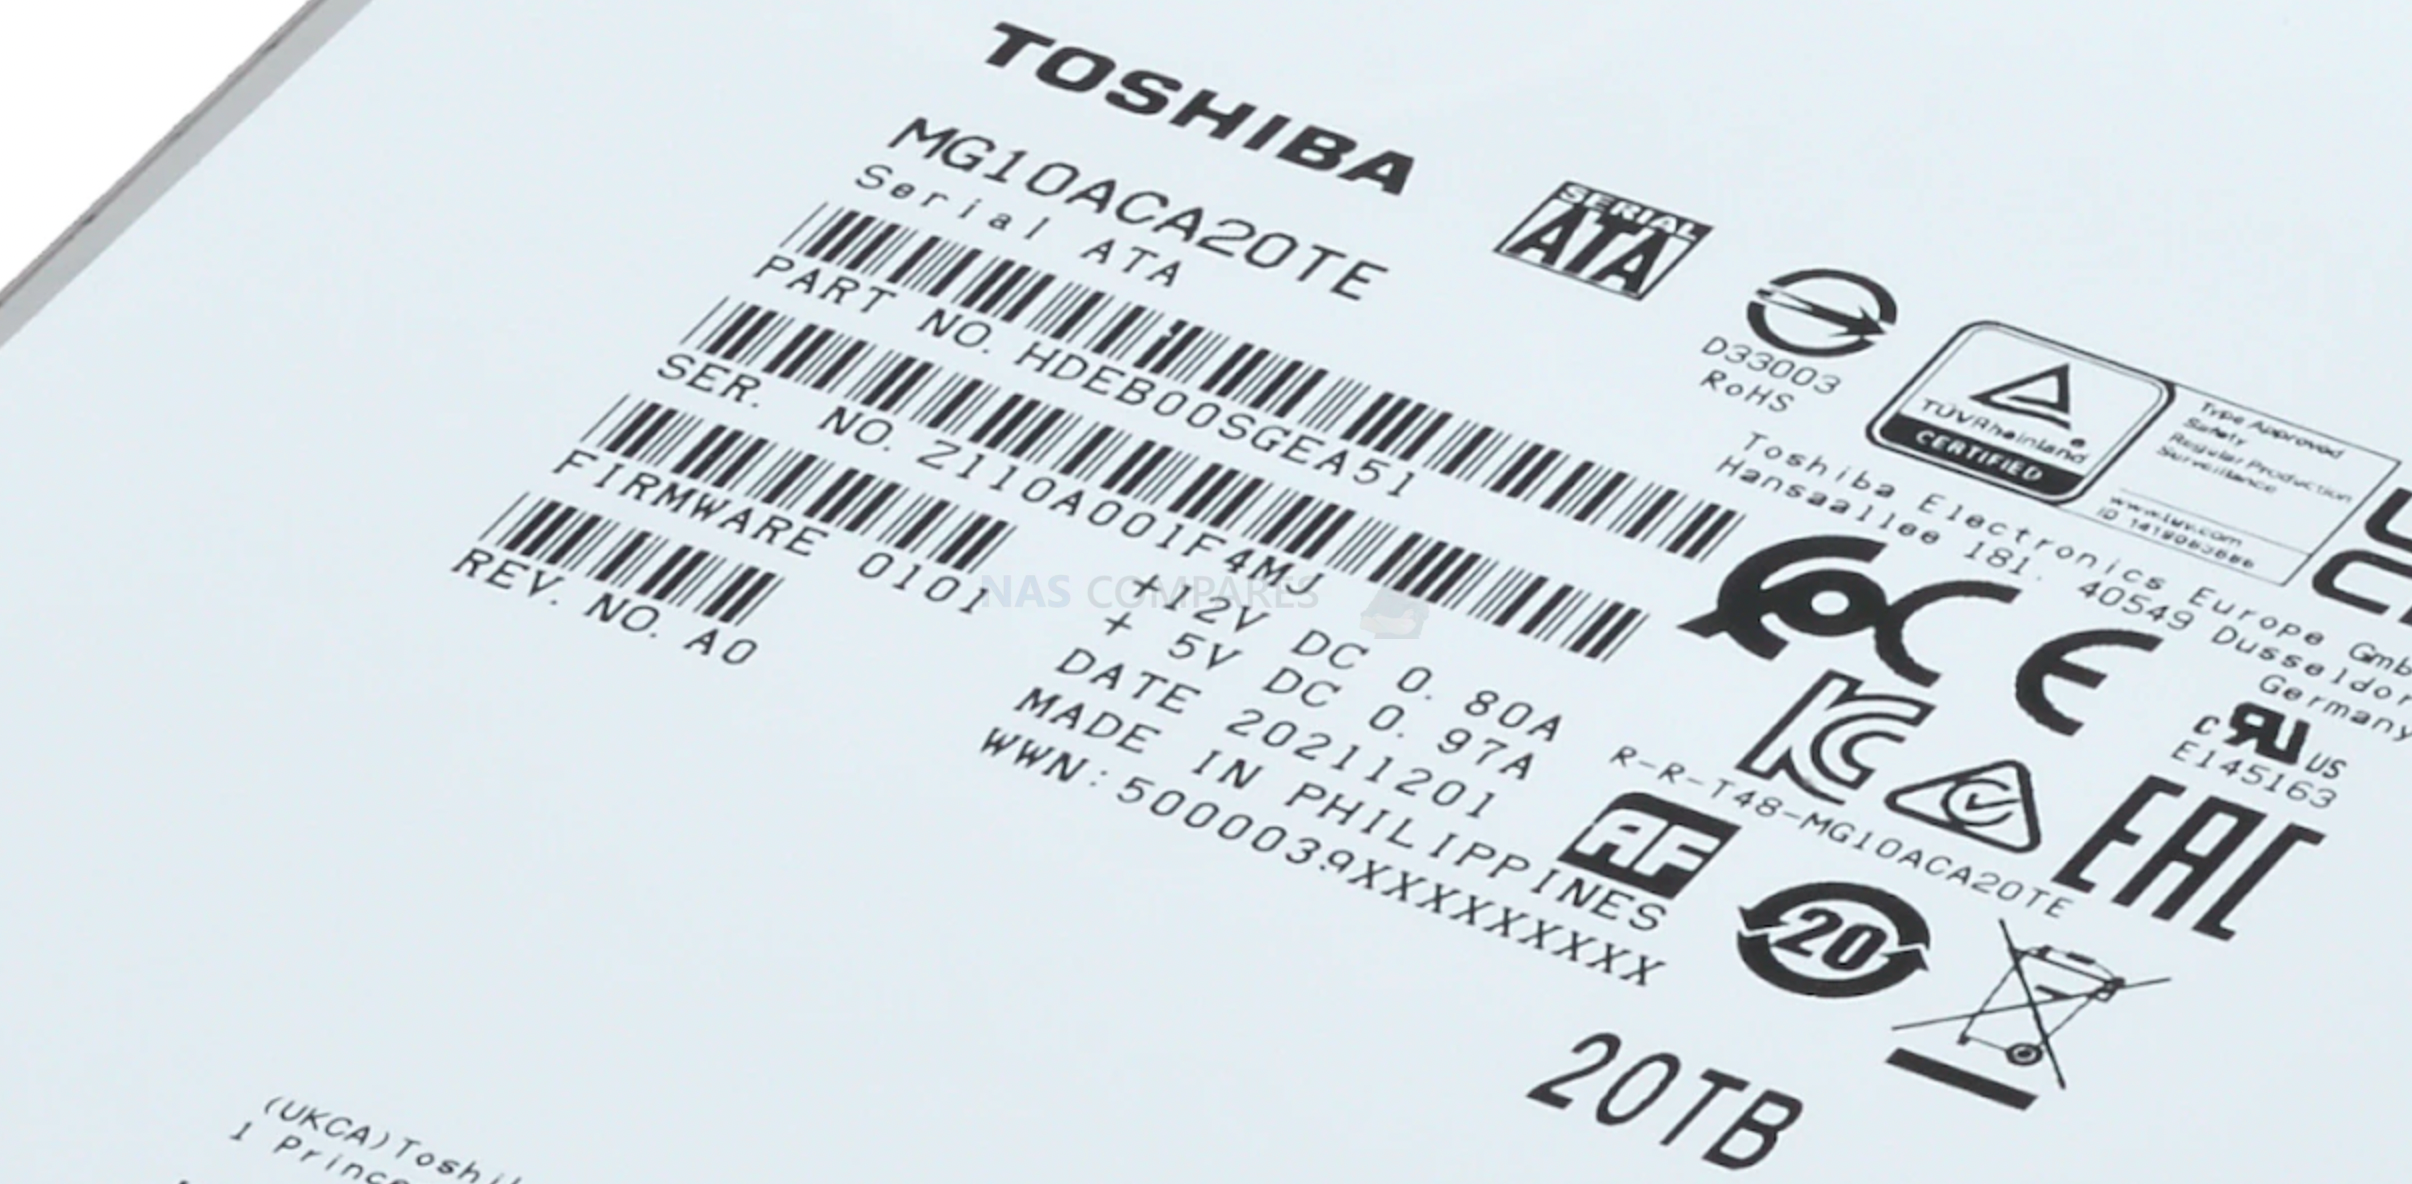 Toshiba Announces 20TB MG10 Series Hard Disk Drives